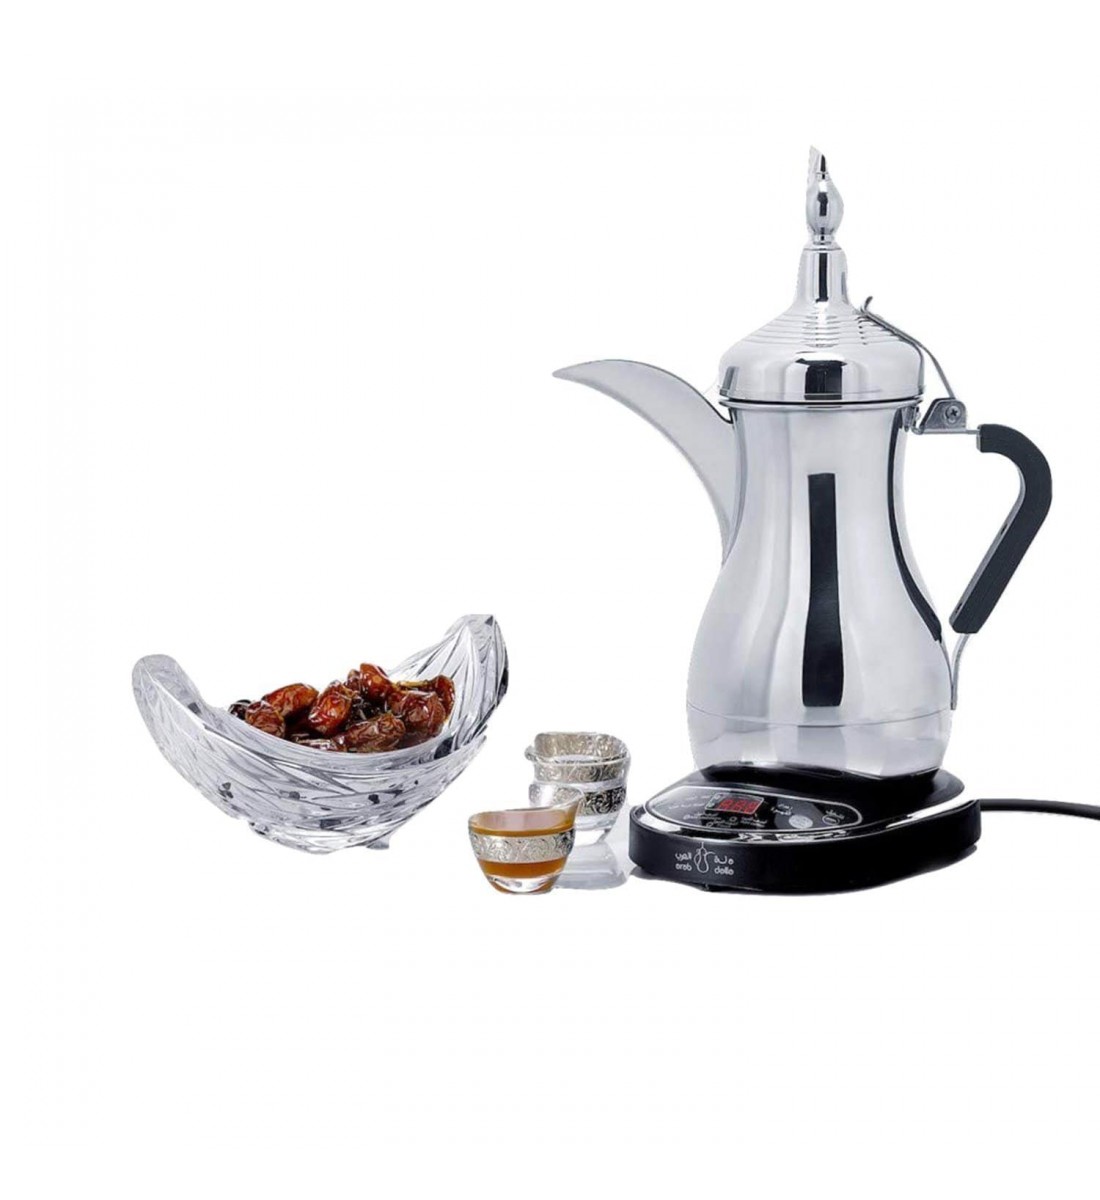 Dallah Al Arab for making Arabic coffee, 800 ml